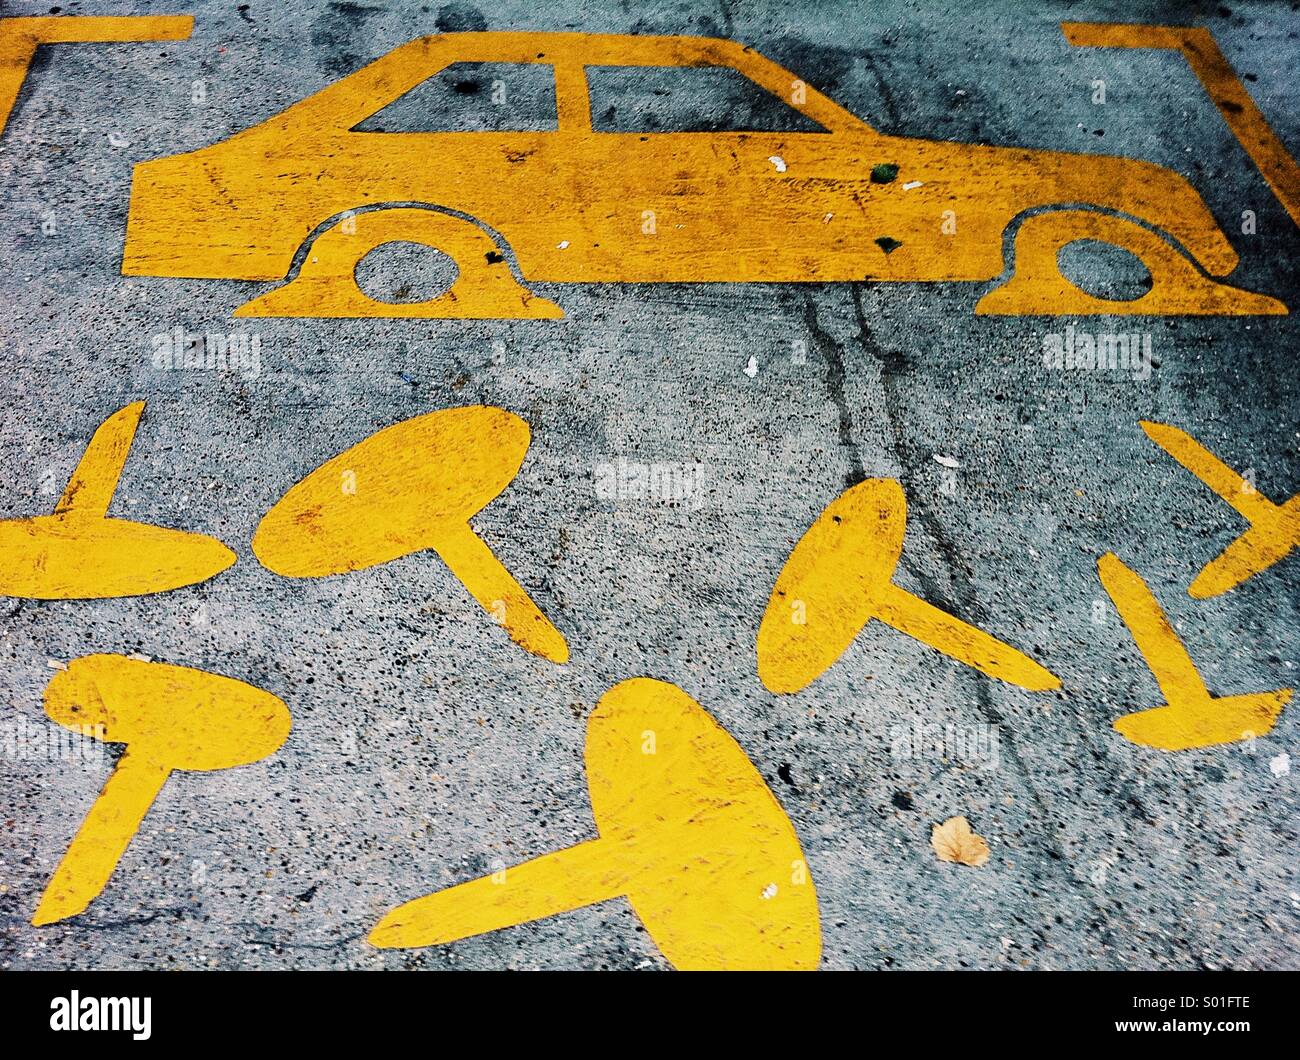 Arte di strada su un marciapiede raffigurante una macchina con pneumatici  piatti e un sacco di caduta di puntine da disegno Foto stock - Alamy